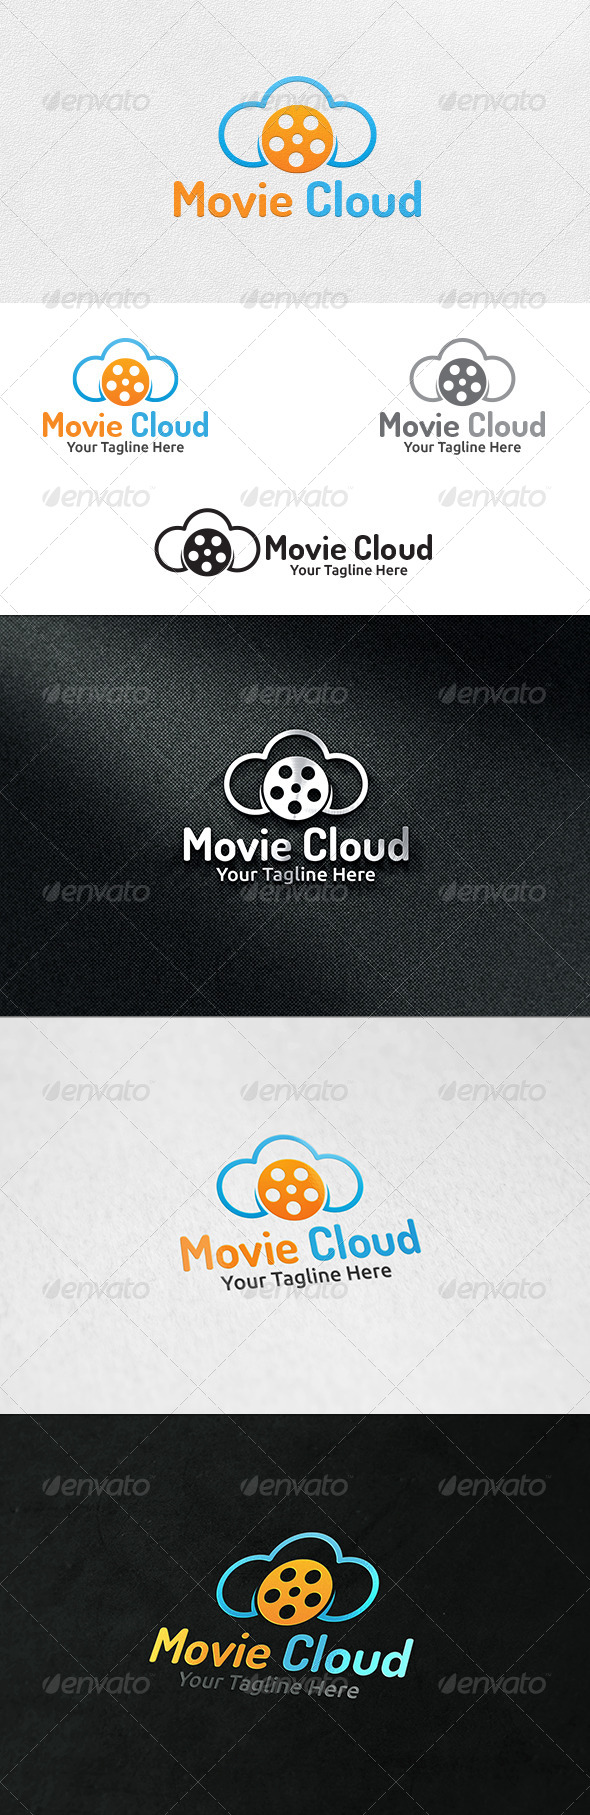 Cloud Movies - Logo Template